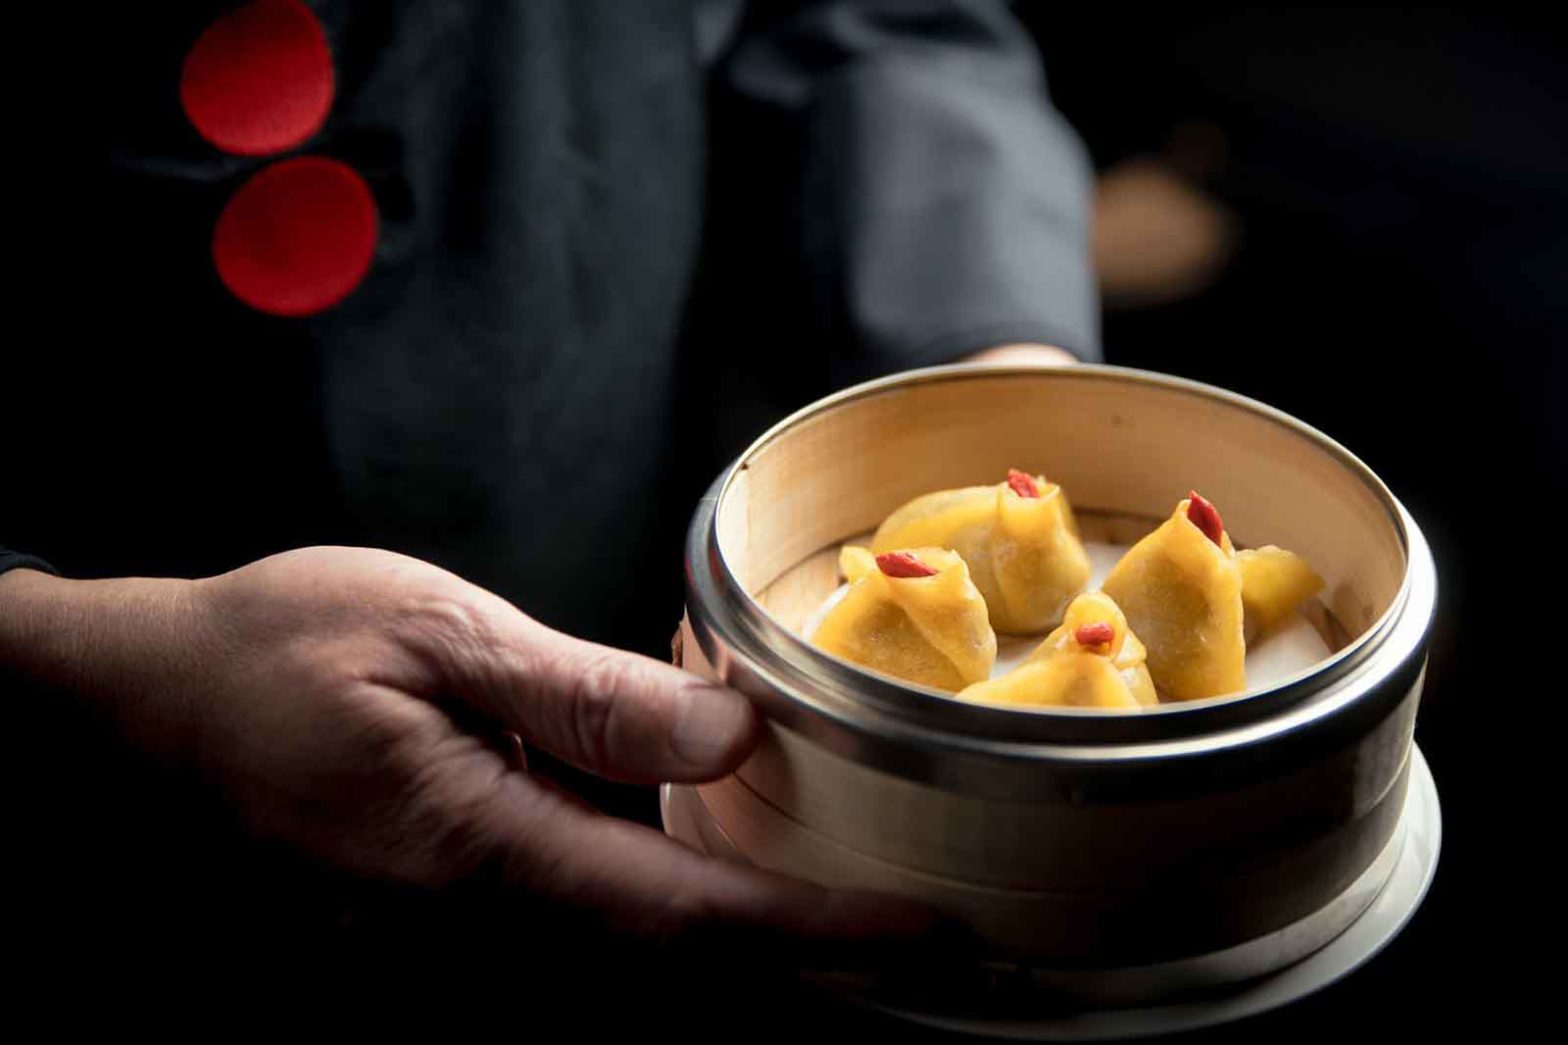 Ba ristorante cinese Milano ravioli al vapore